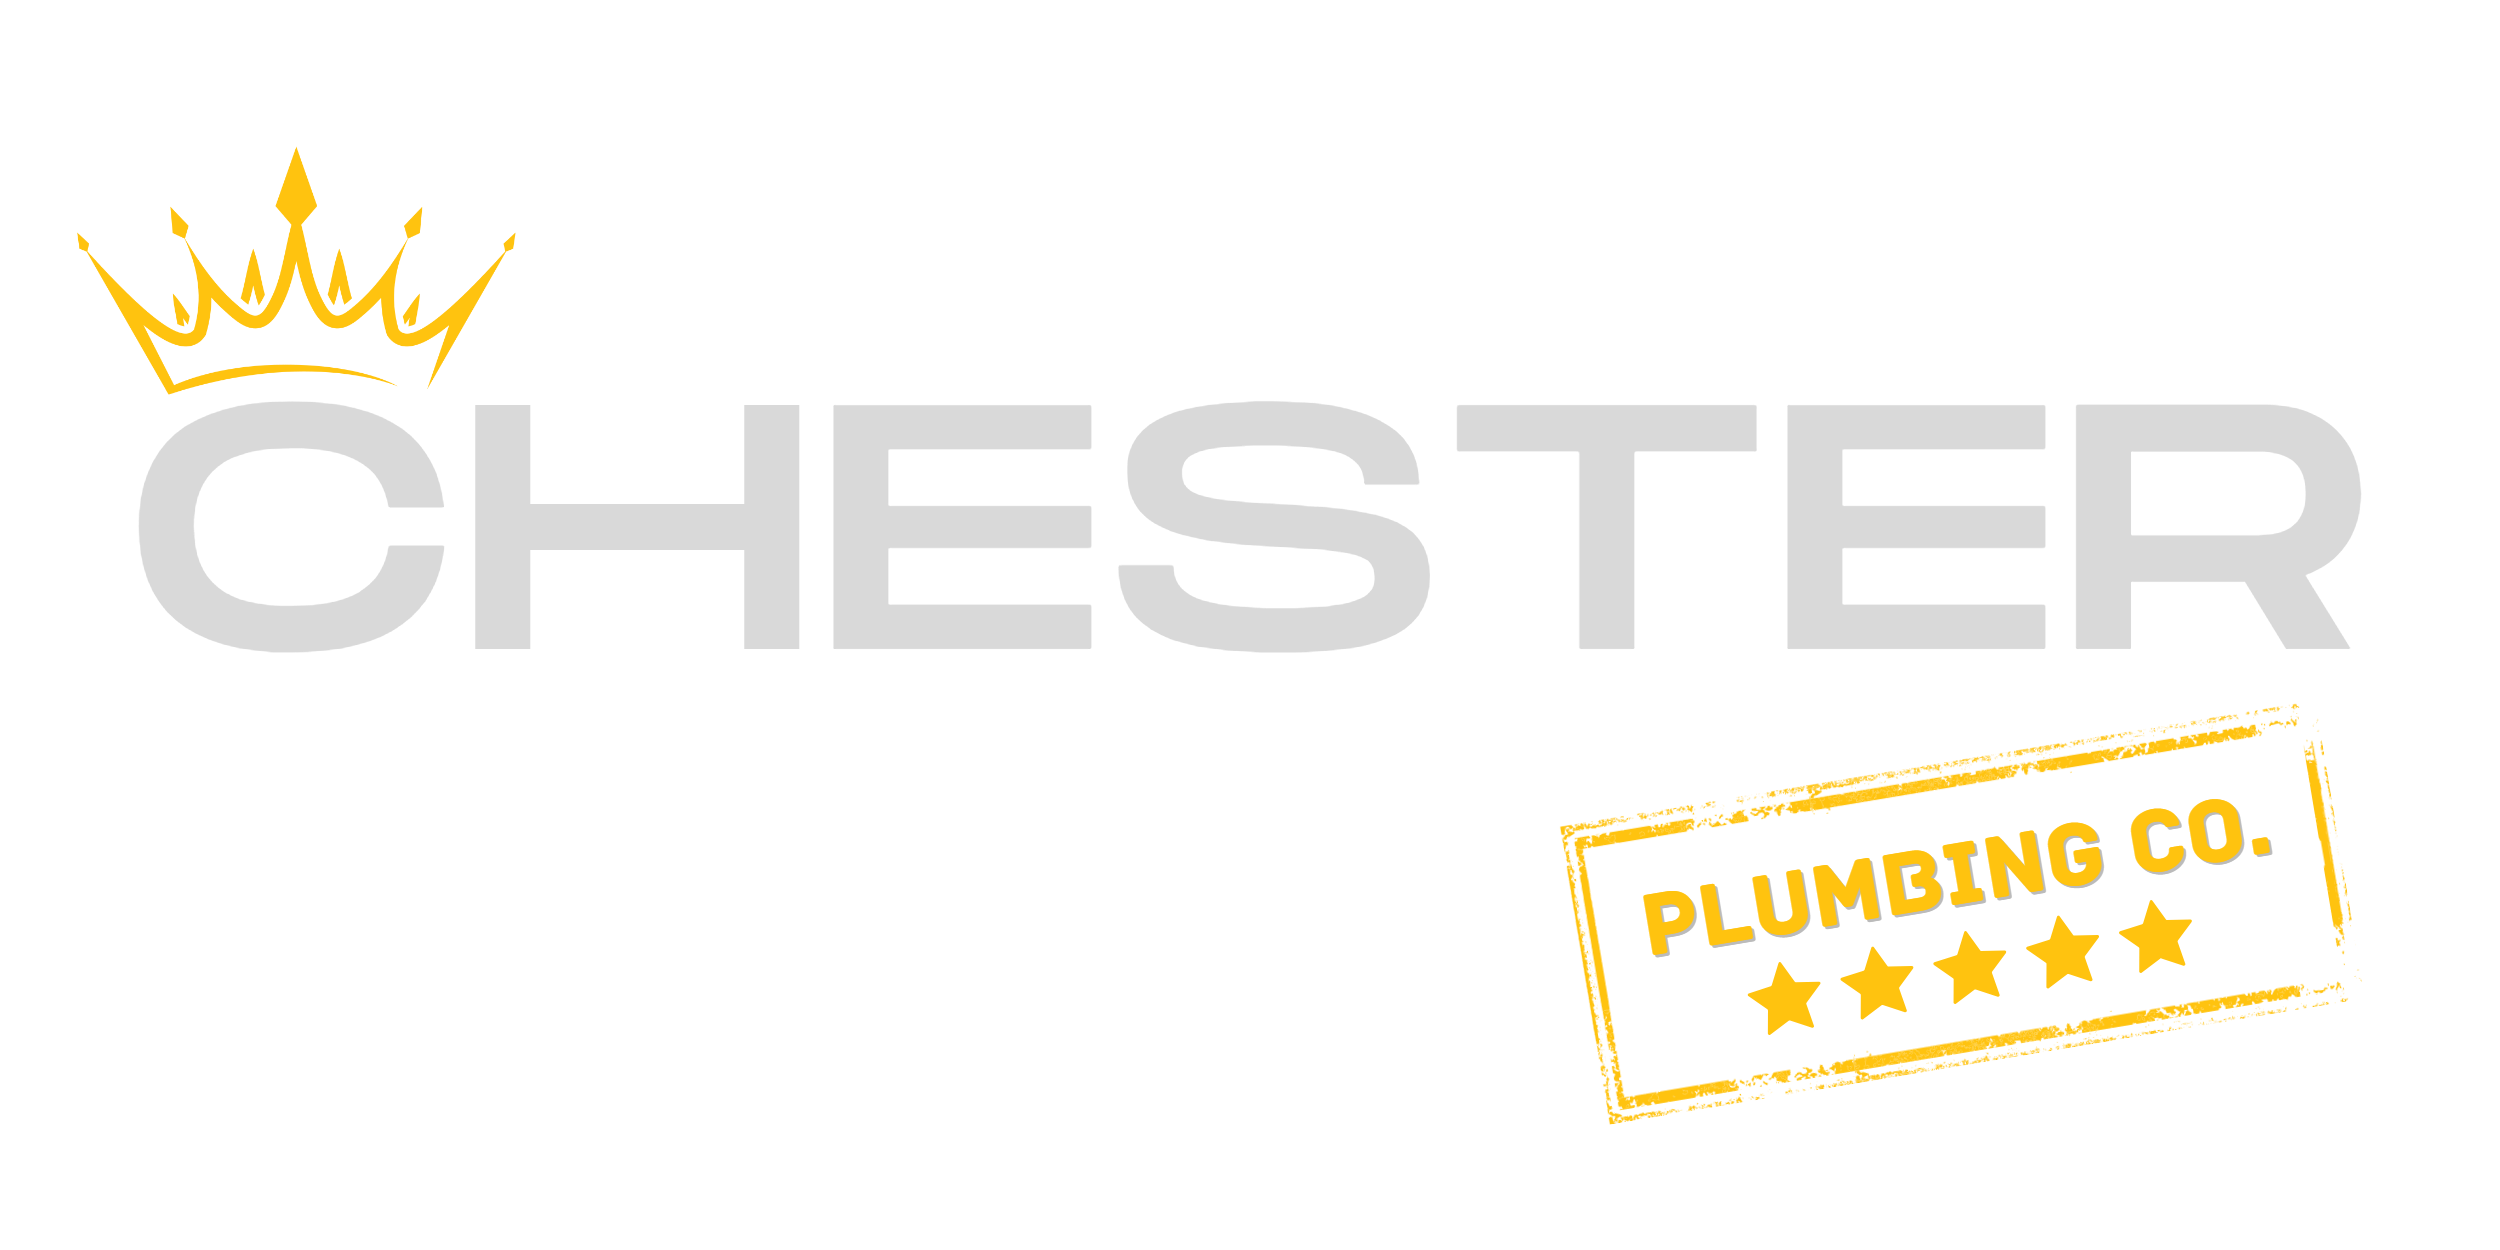 Chester Plumbing Co. Logo